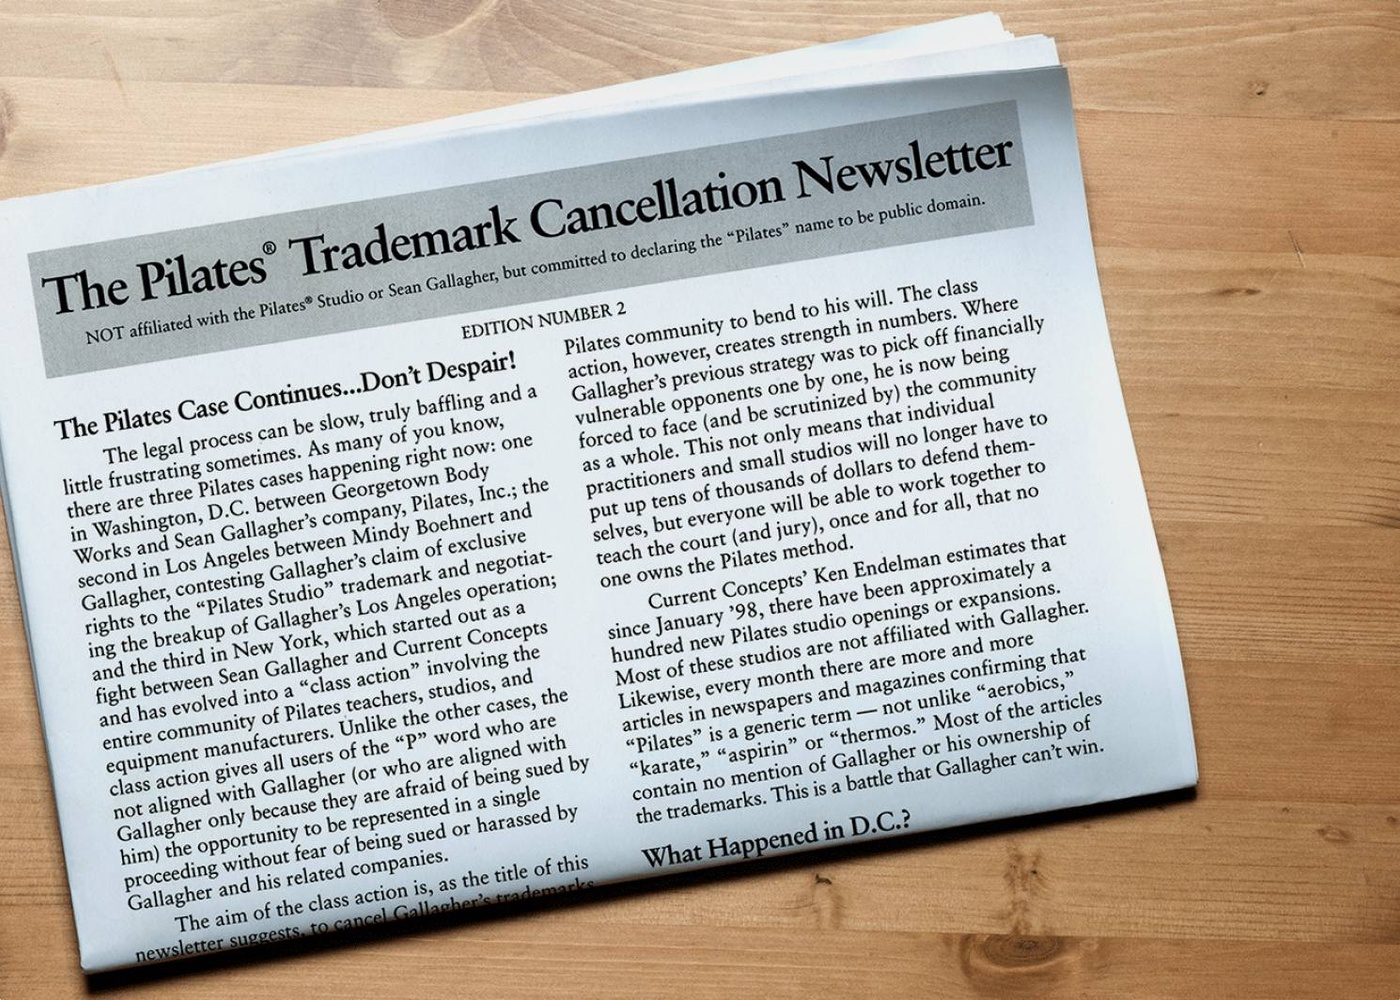 The Pilates Trademark Cancellation Newsletter